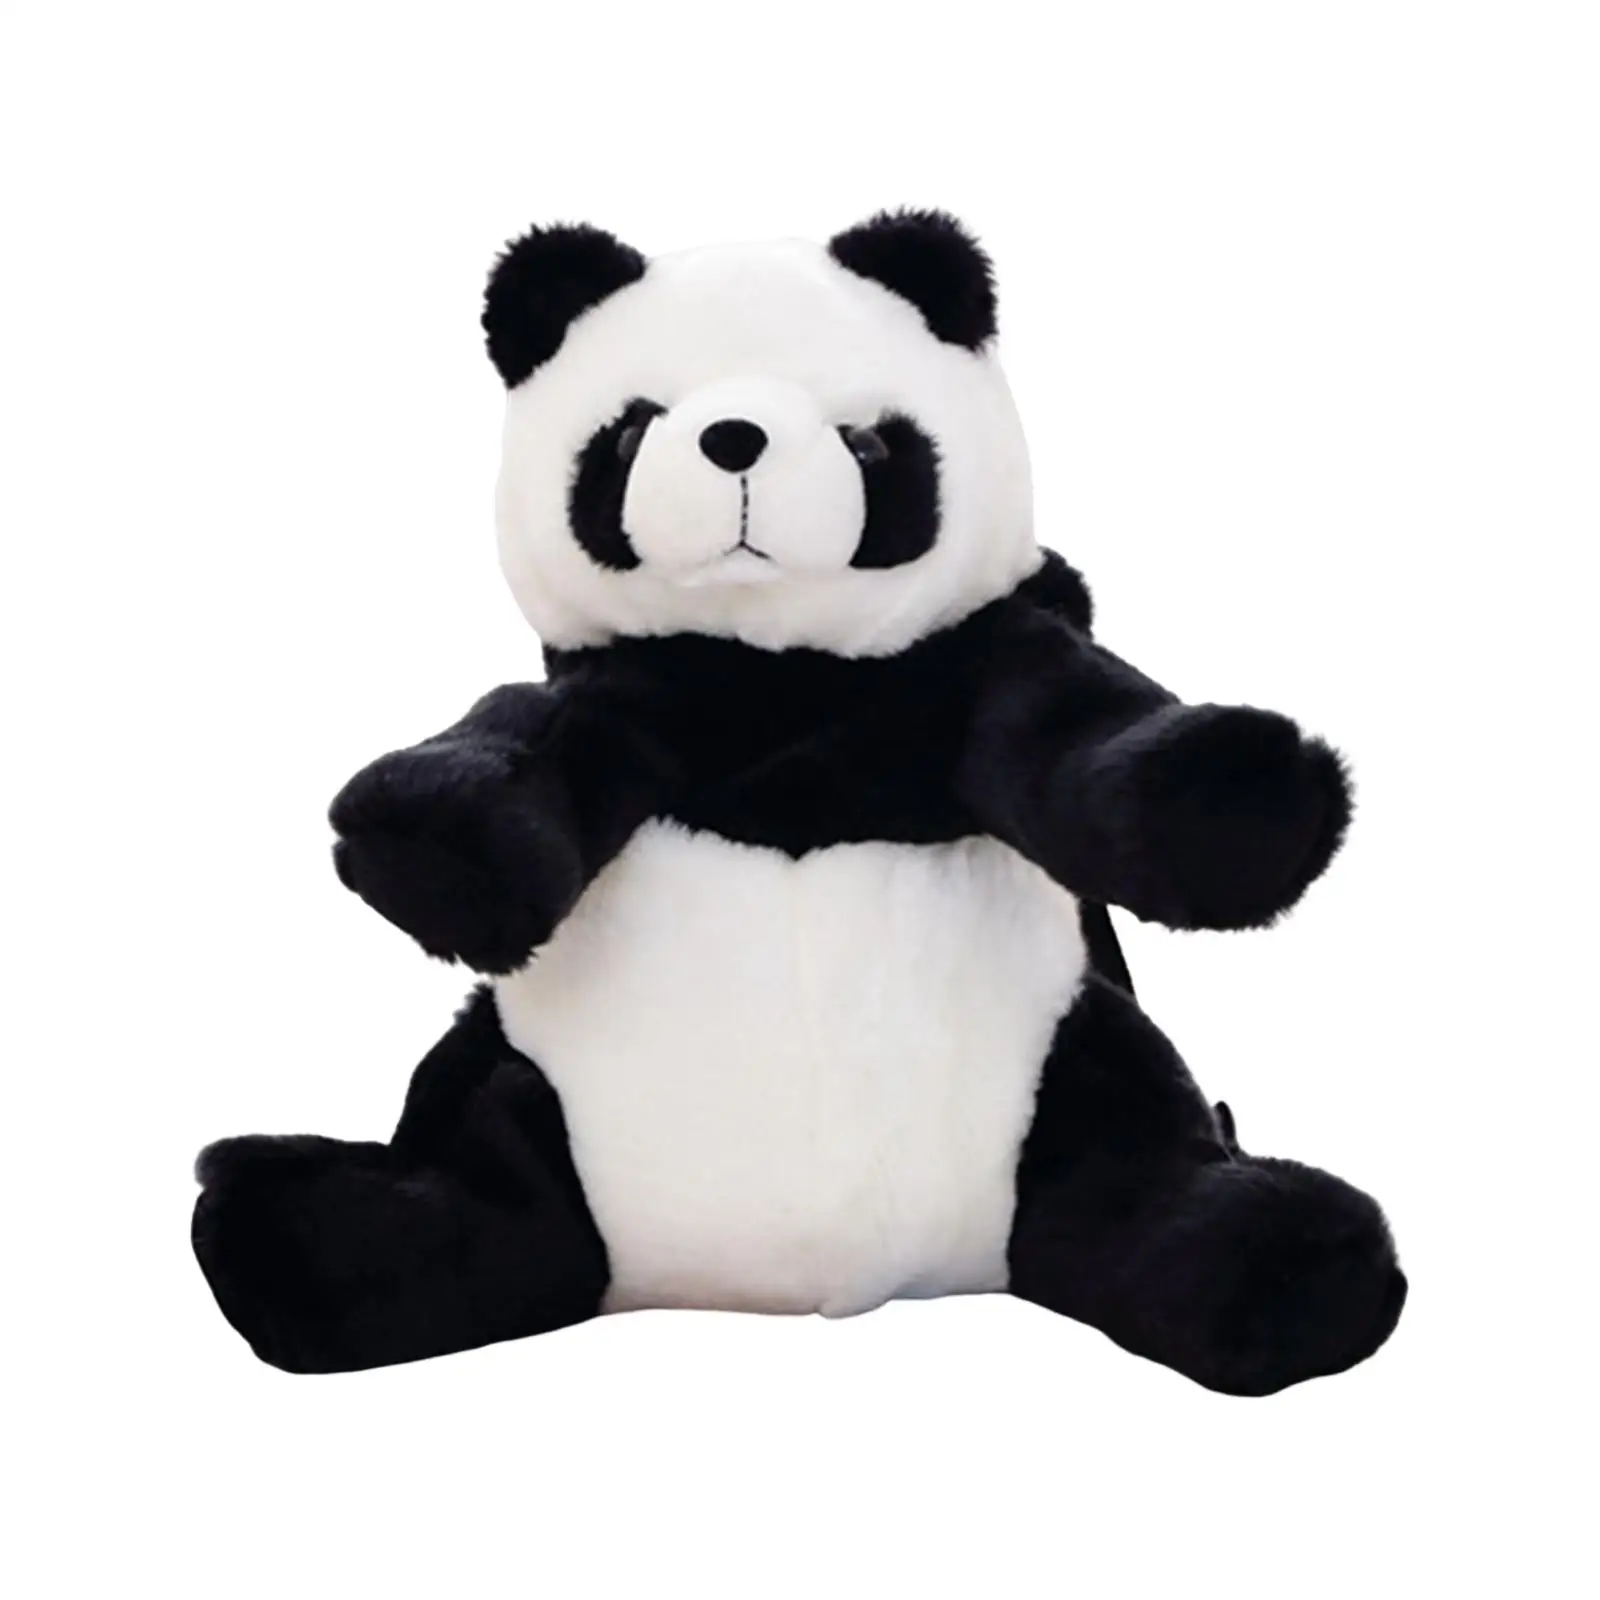 Plush Panda Backpack Large Capacity Stuffed Panda Doll for Girl Unisex Gifts